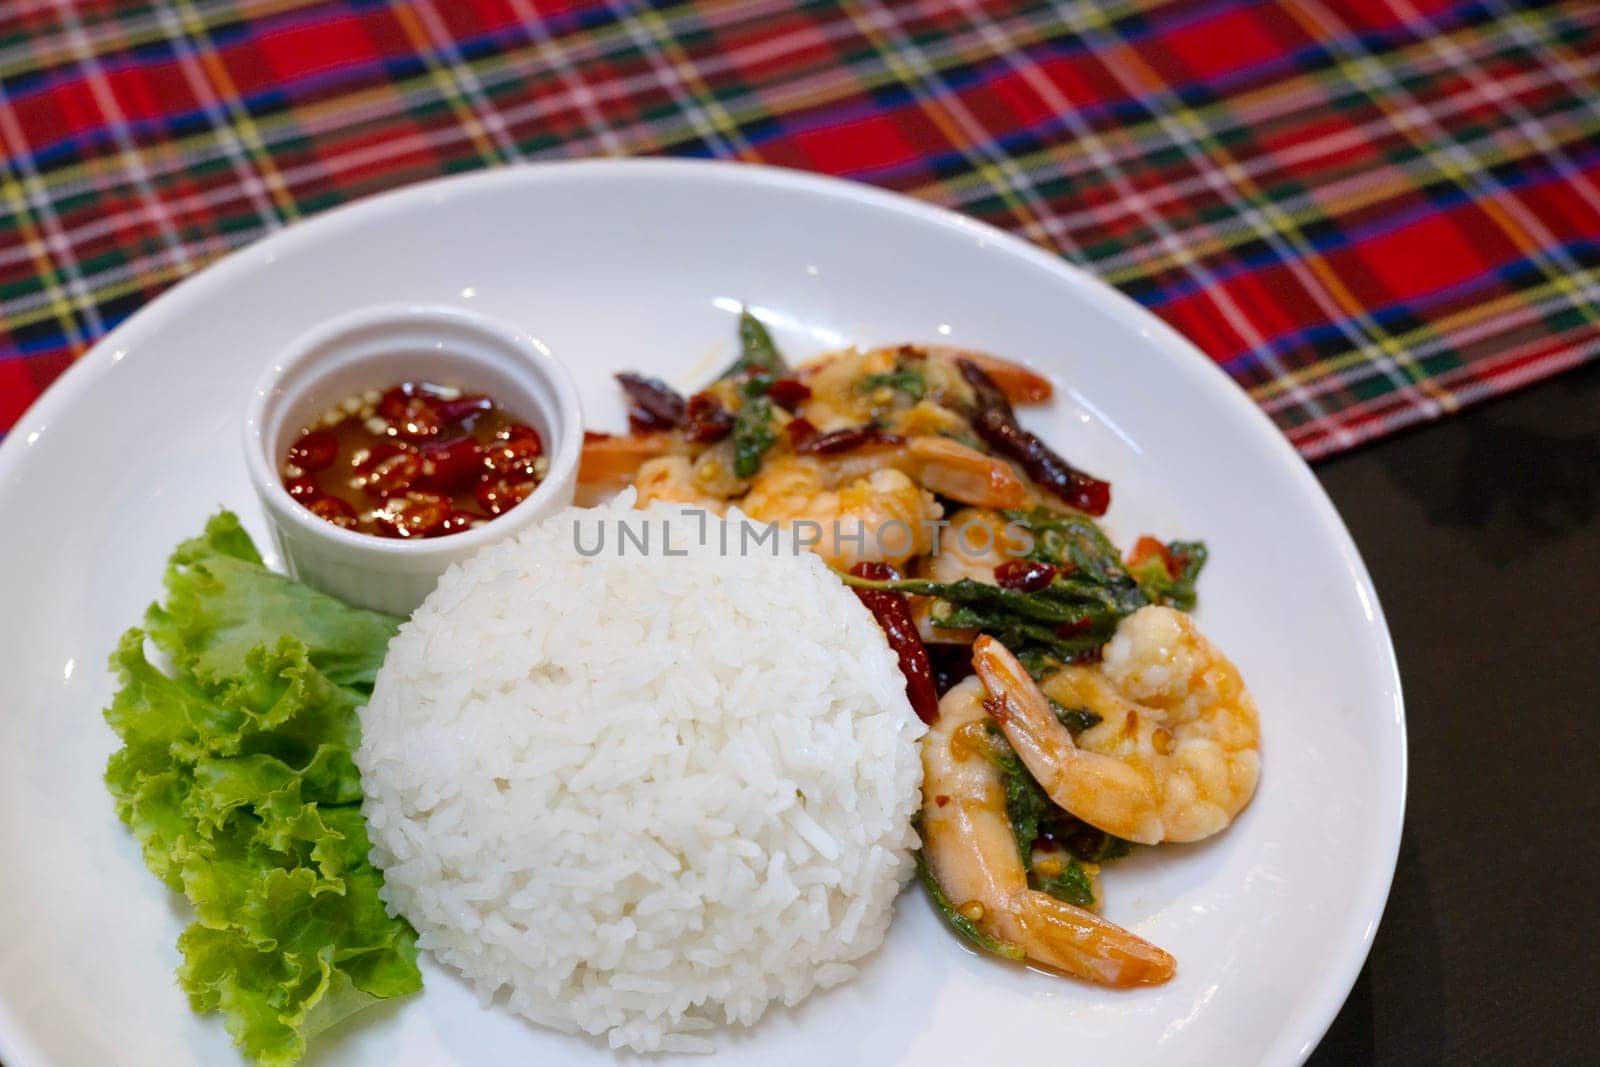 Fried Shrimp With Basil Leaf On Rice by urzine